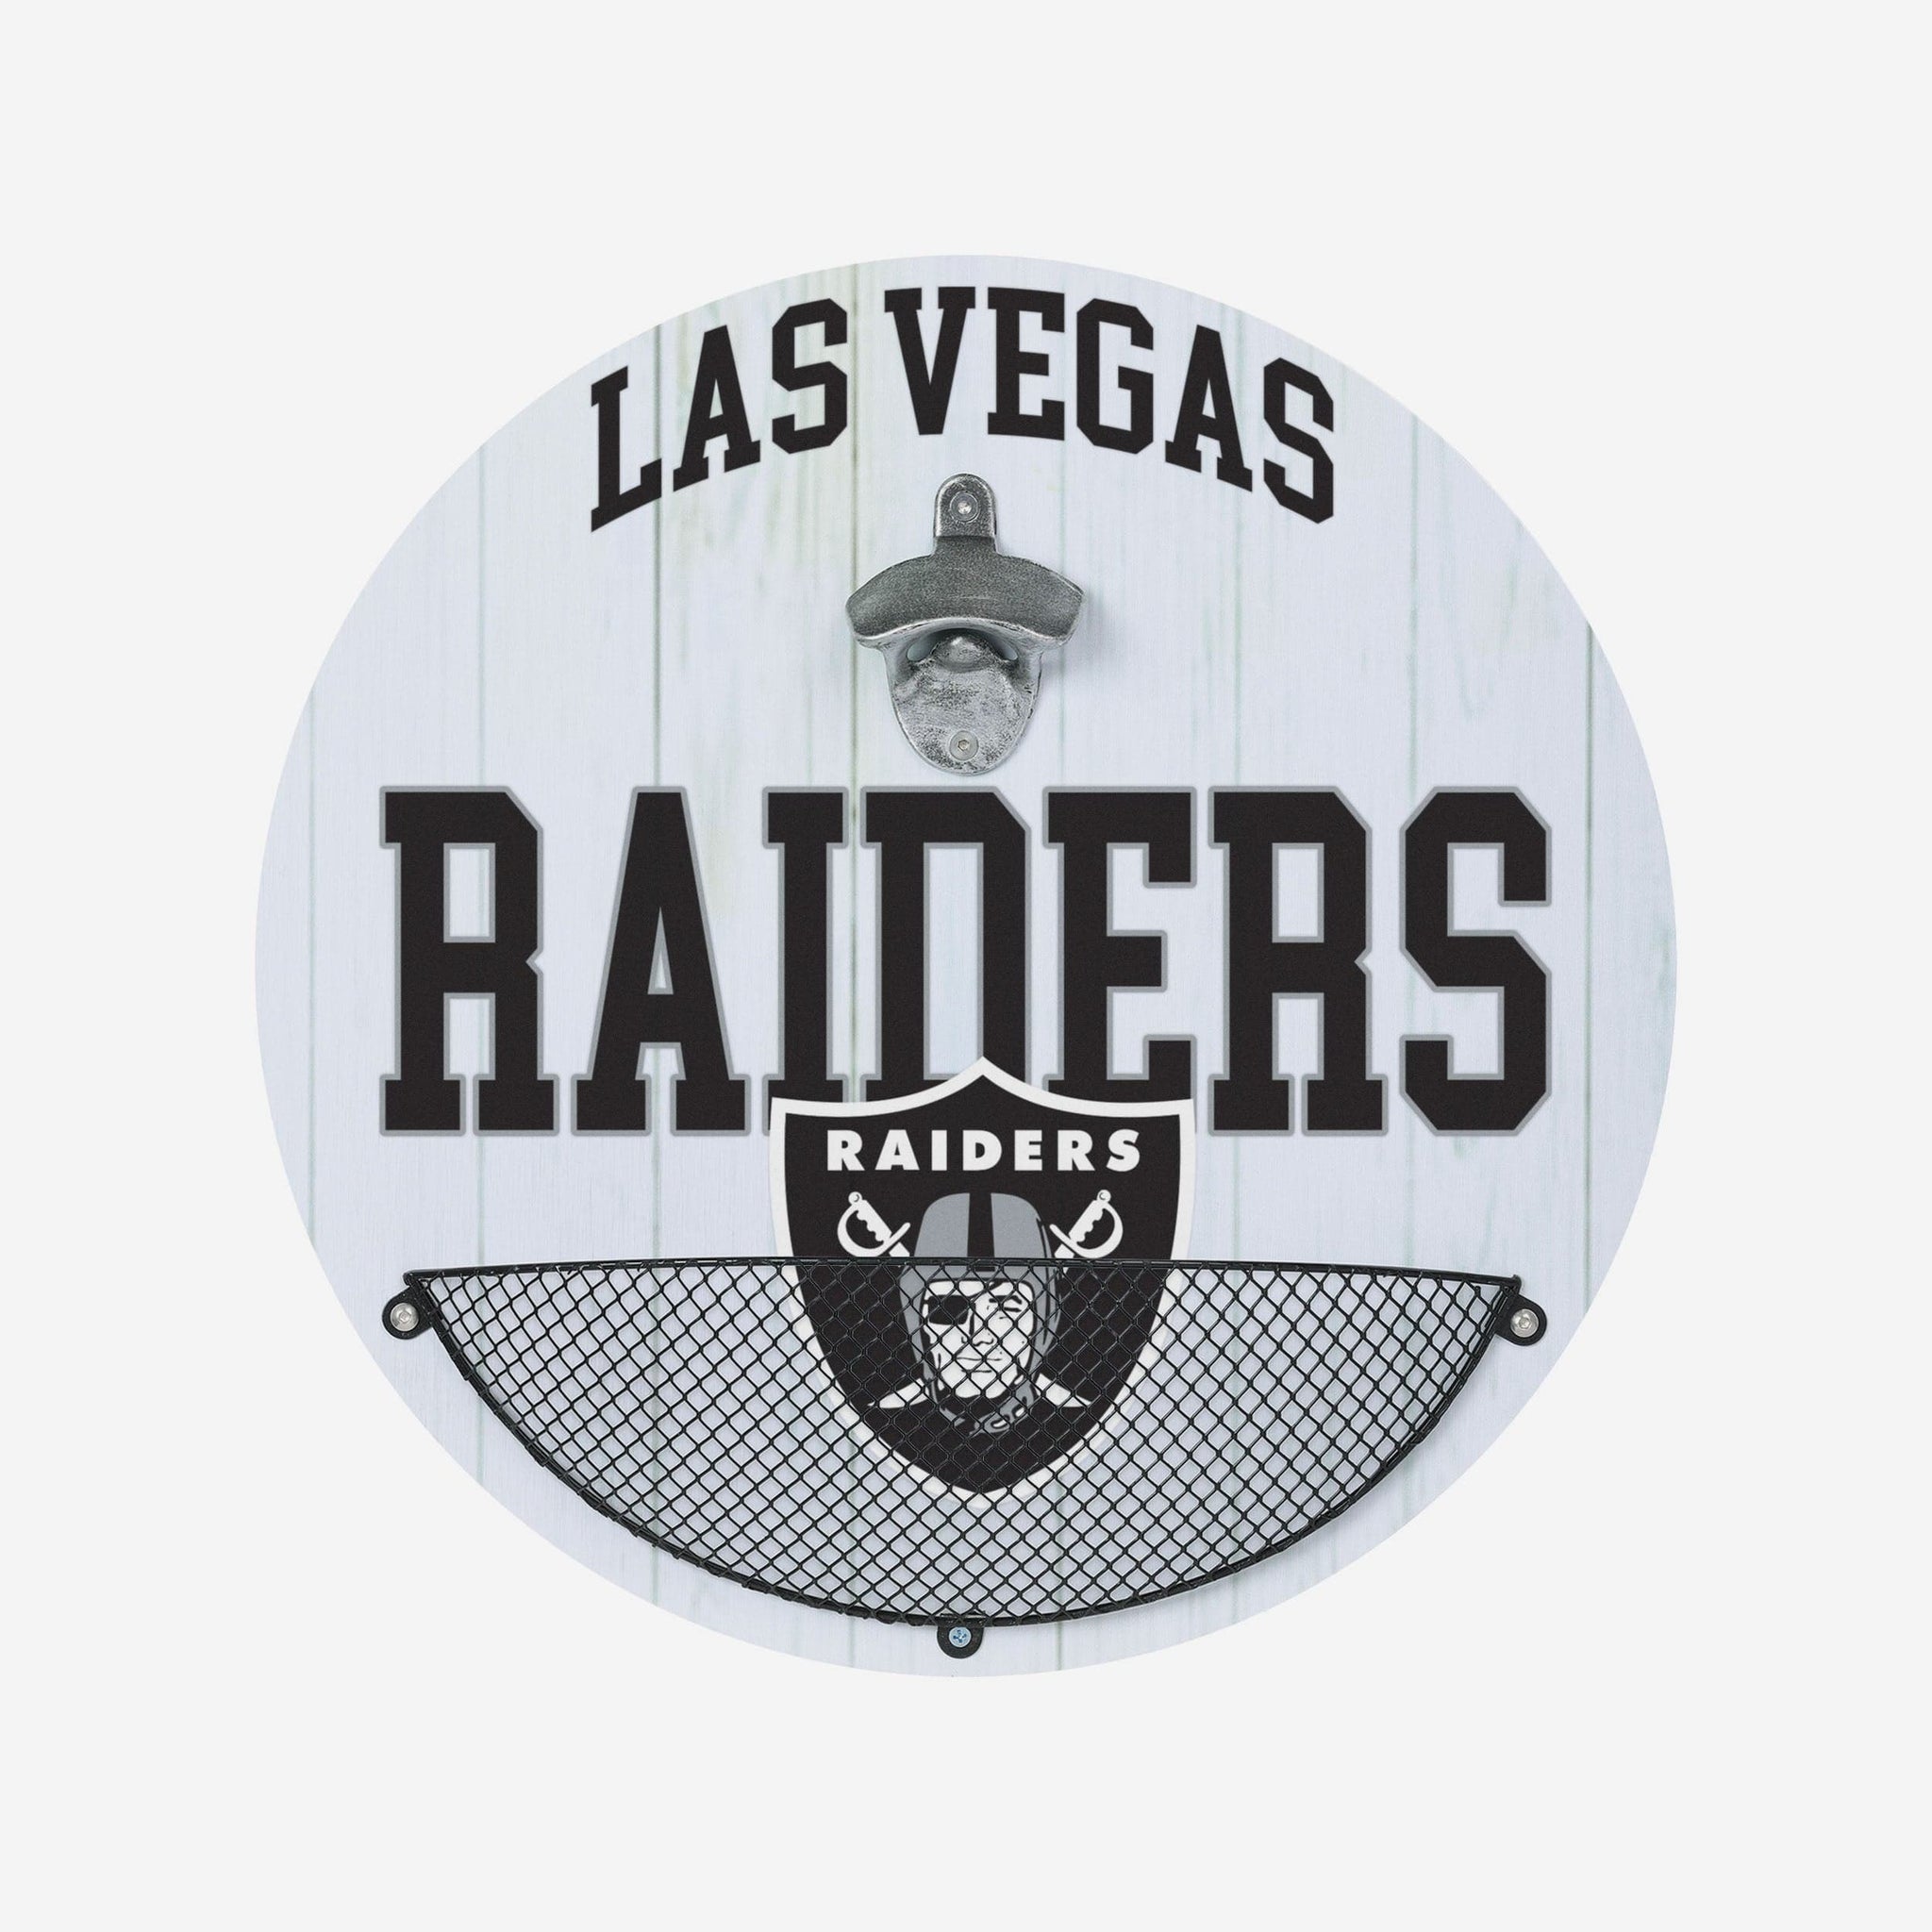 Las Vegas Raiders Gift Basket - Limited Quantities